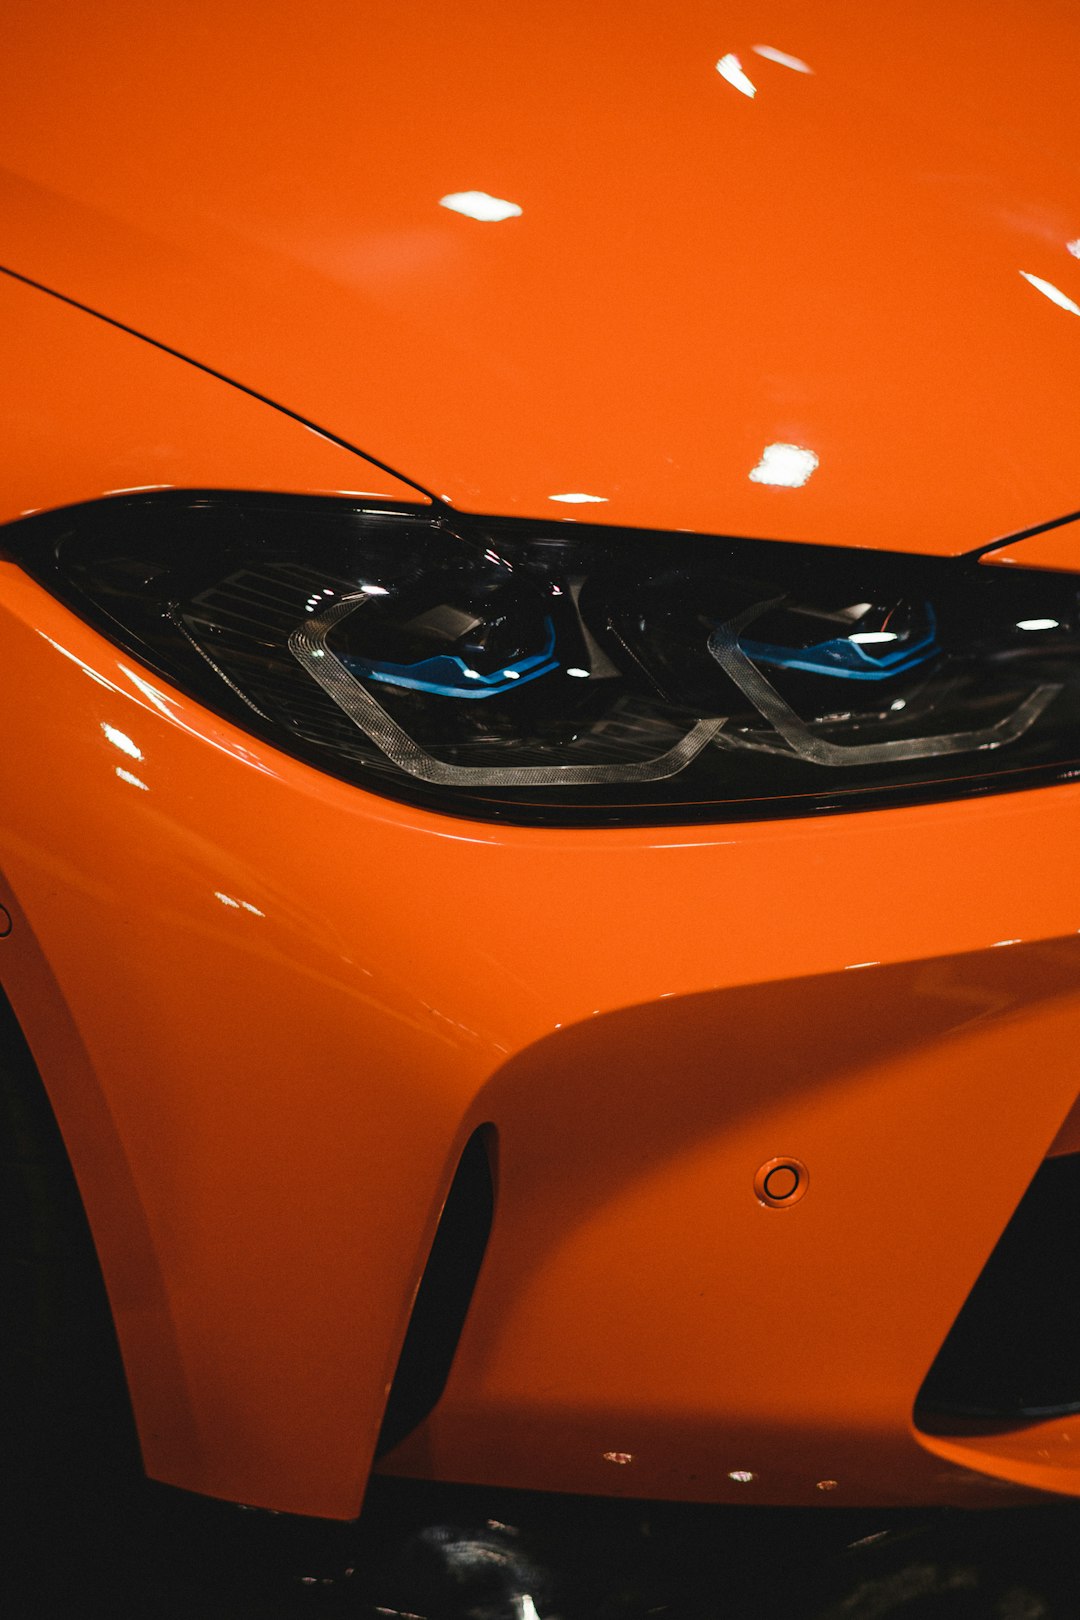 orange ferrari car in close up photography